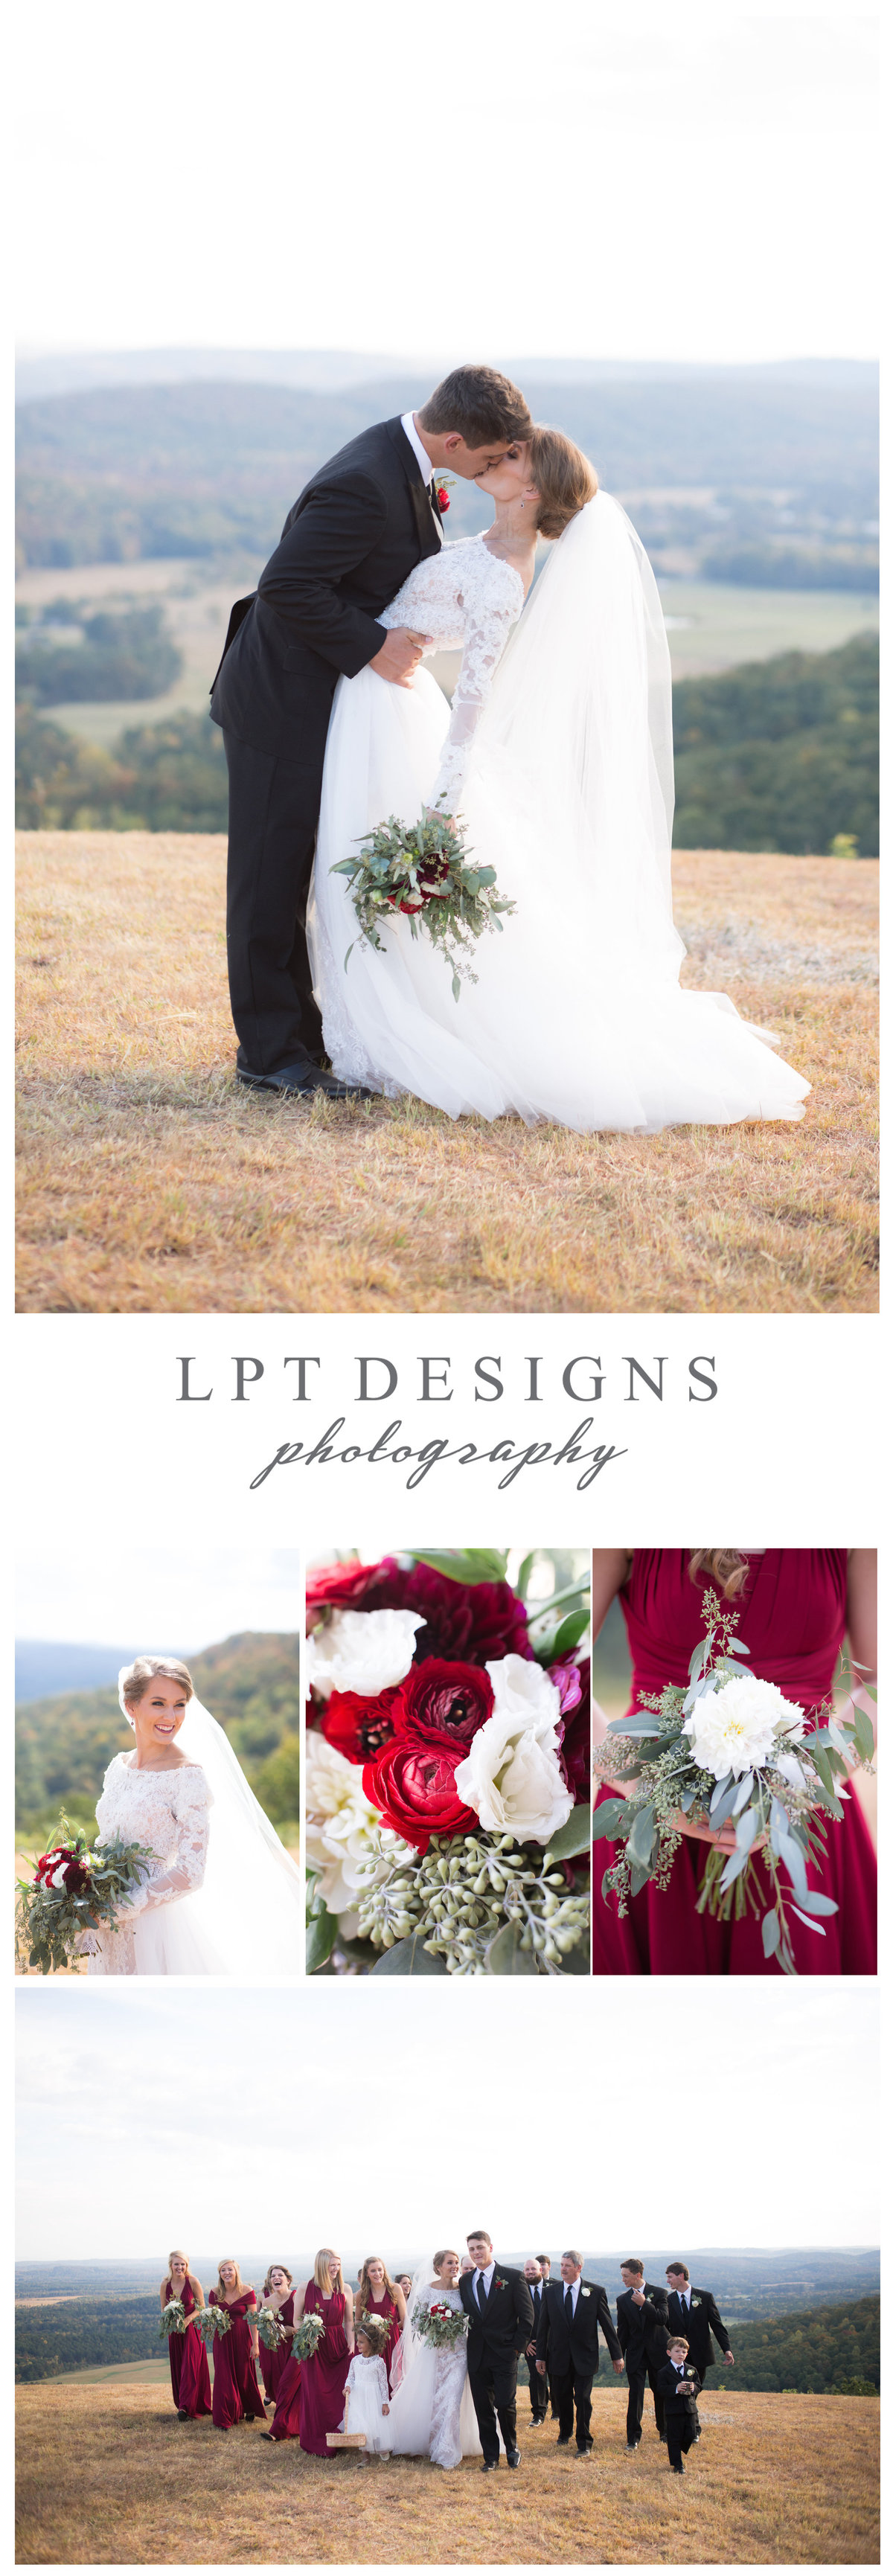 LPT Designs Photography Lydia Thrift Gadsden Alabama Boutique Wedding Photographer New Web 14